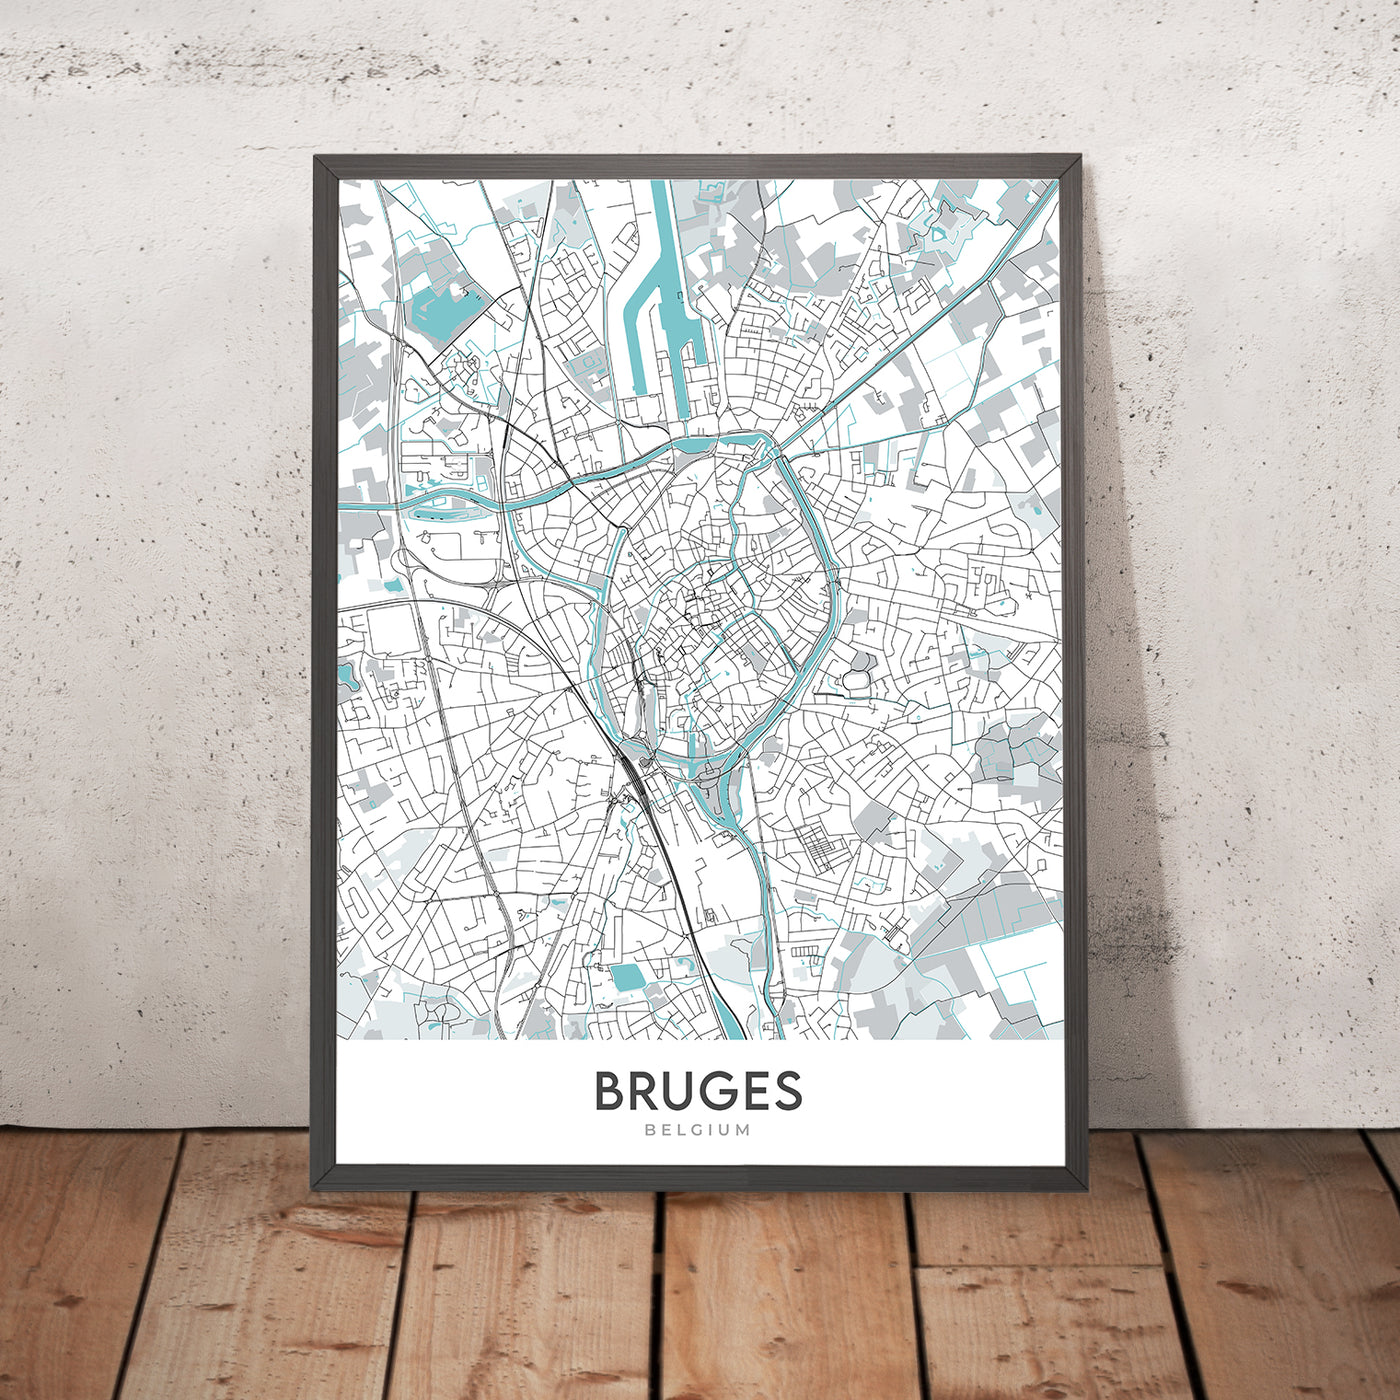 Modern City Map of Bruges, Belgium: Belfry, Basilica, Markt, Minnewater, Groeningemuseum